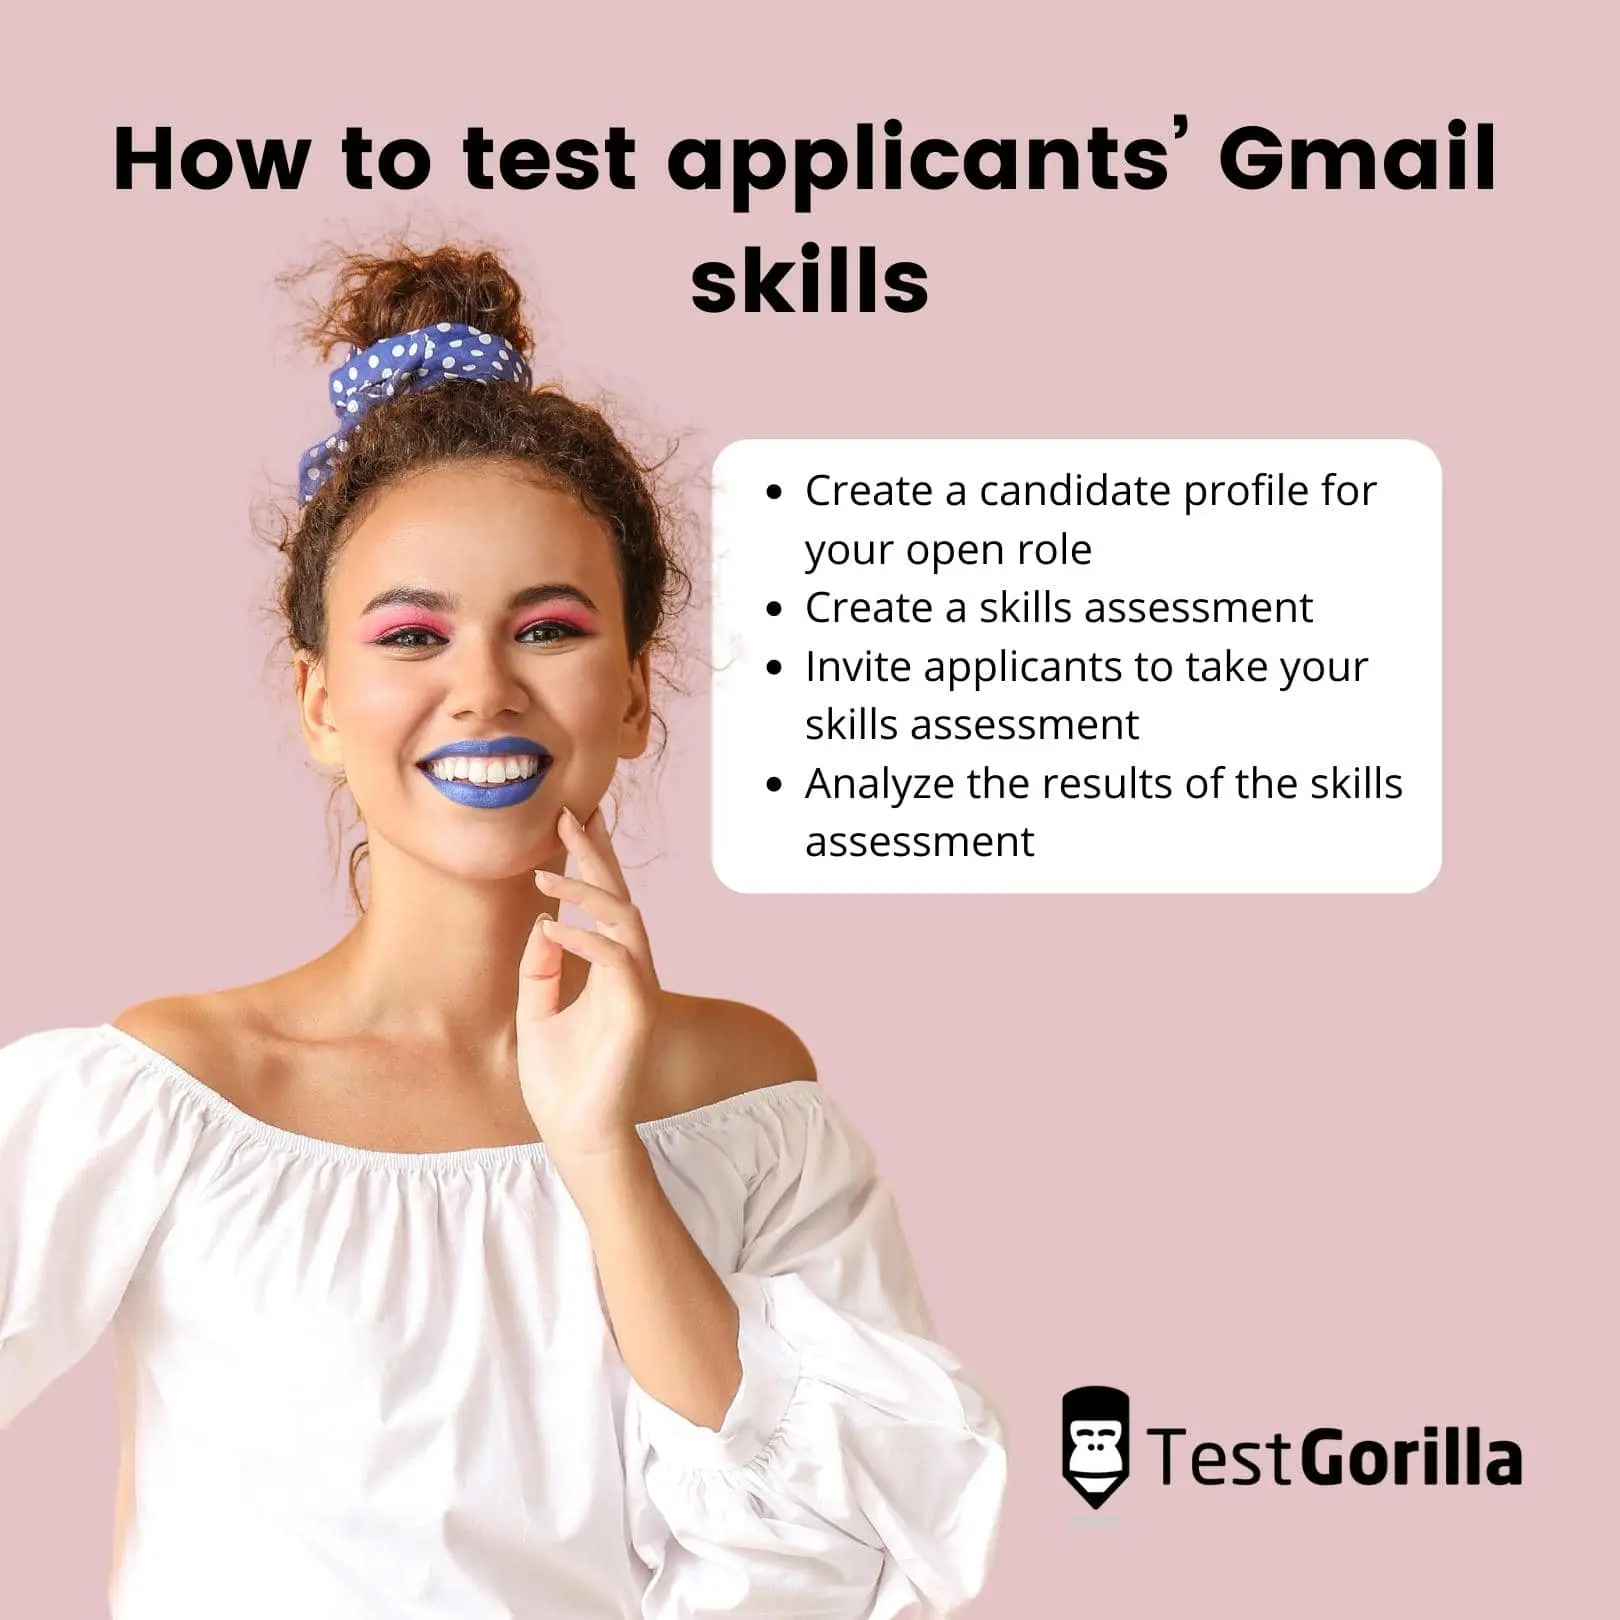 Ways to test applicants’ Gmail skills